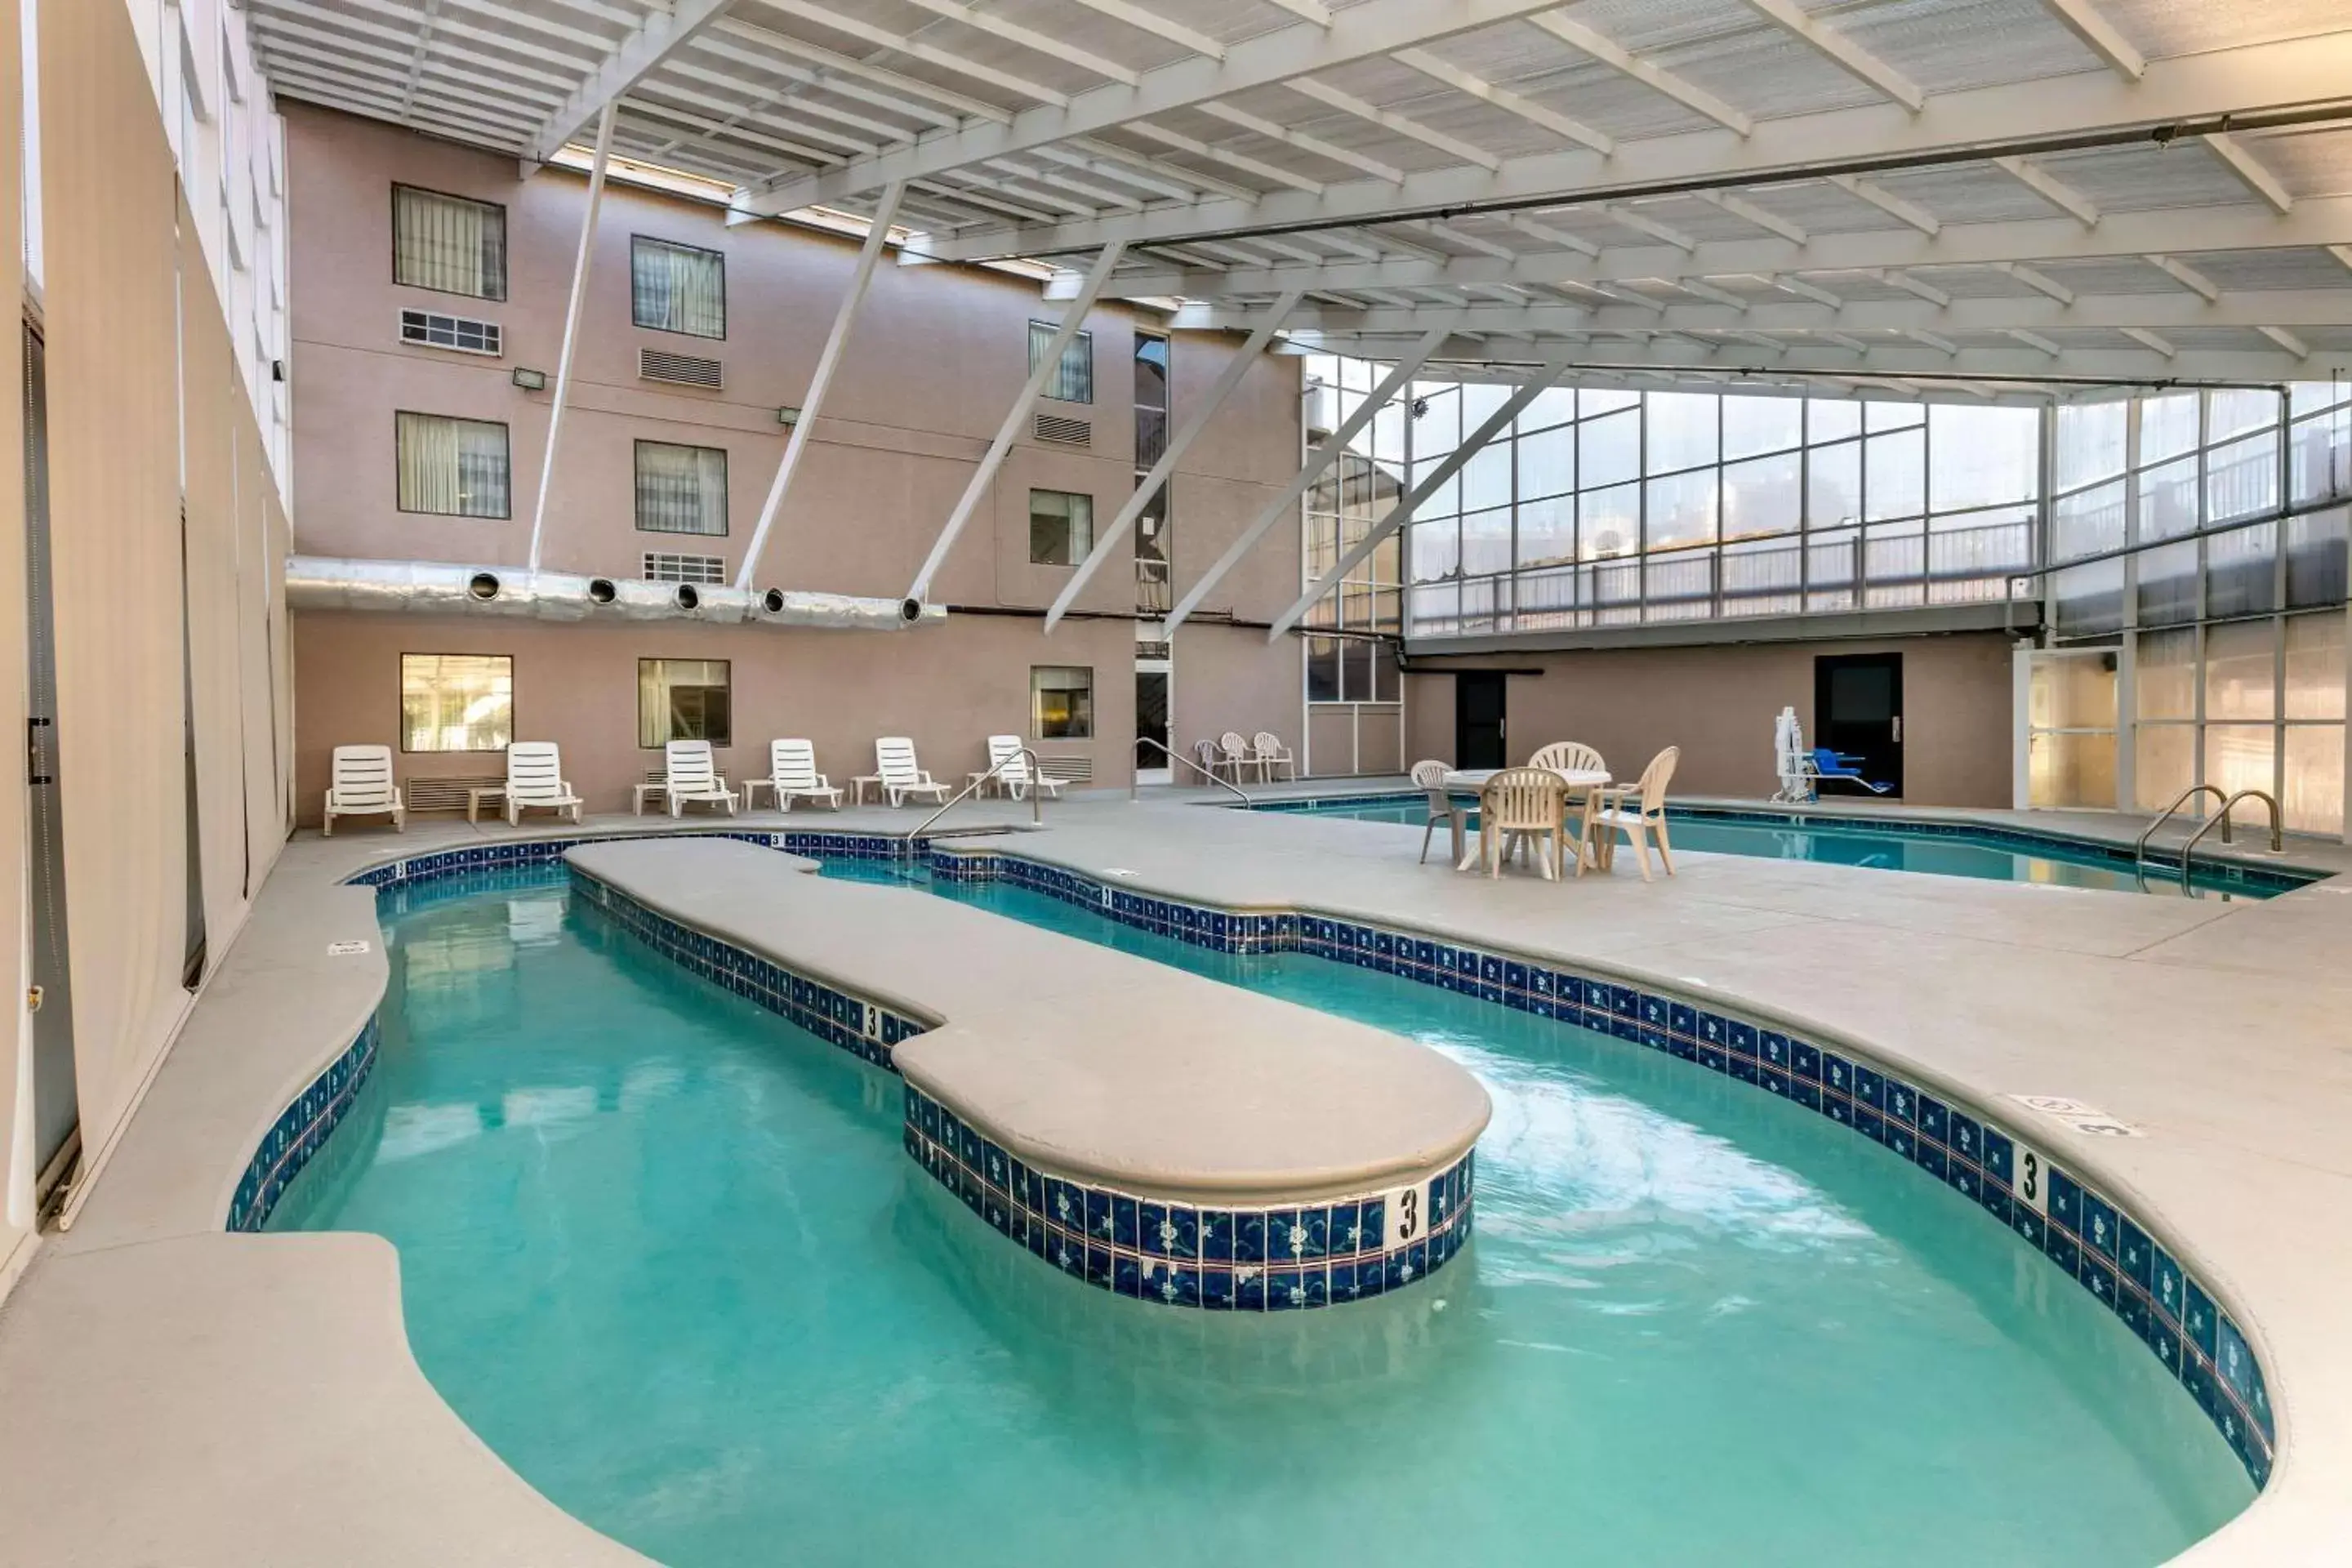 On site, Swimming Pool in Sleep Inn & Suites near Sports World Blvd